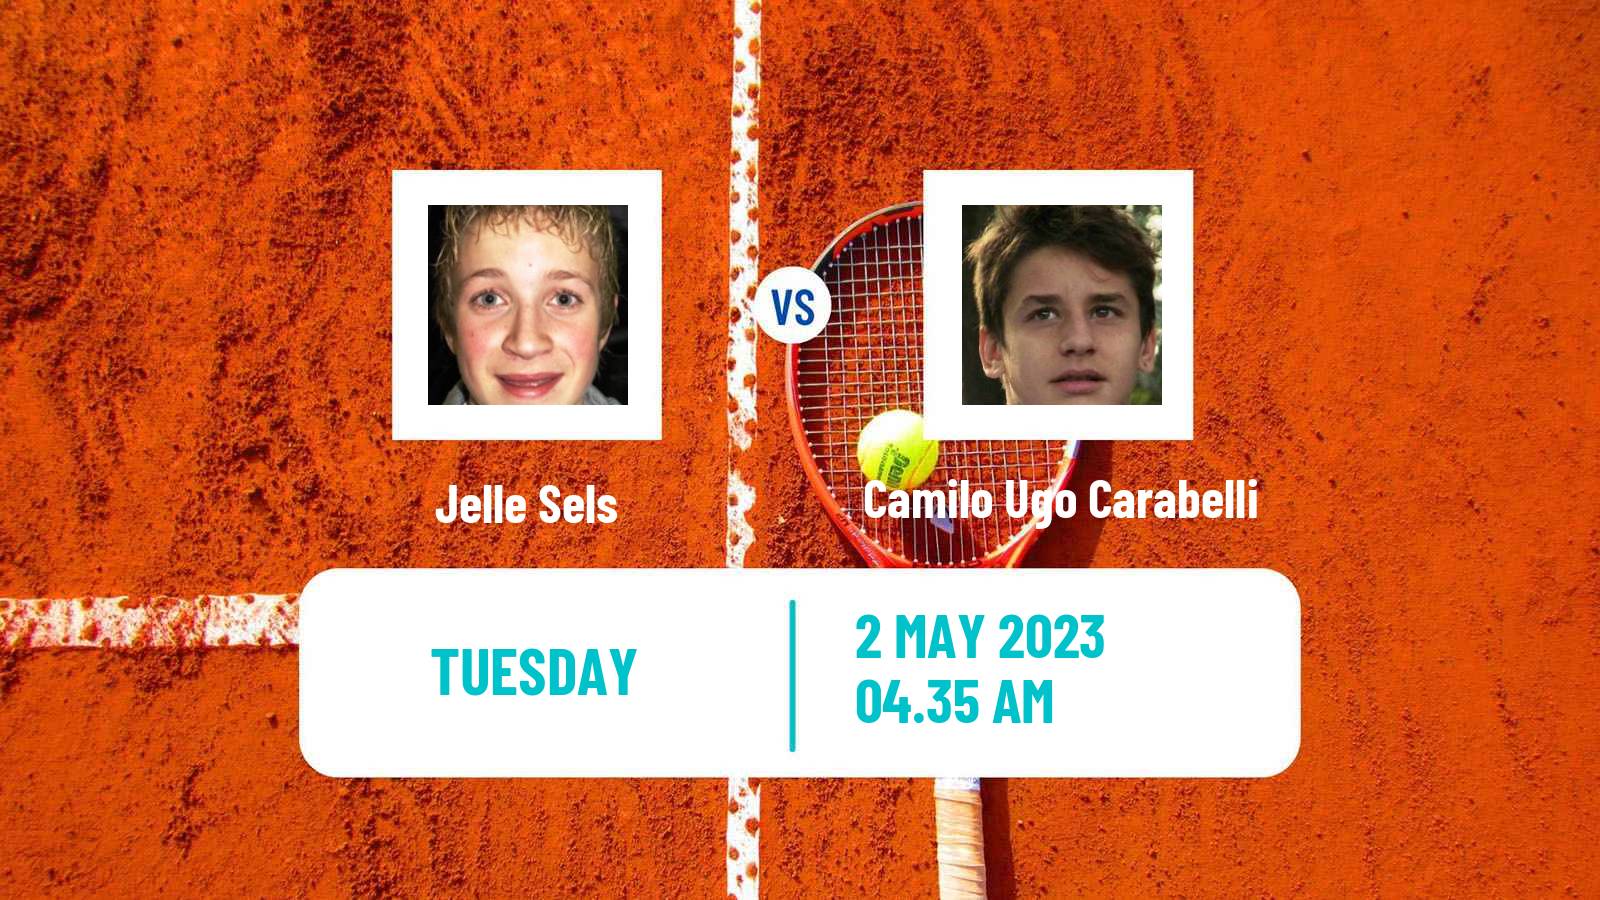 Tennis ATP Challenger Jelle Sels - Camilo Ugo Carabelli